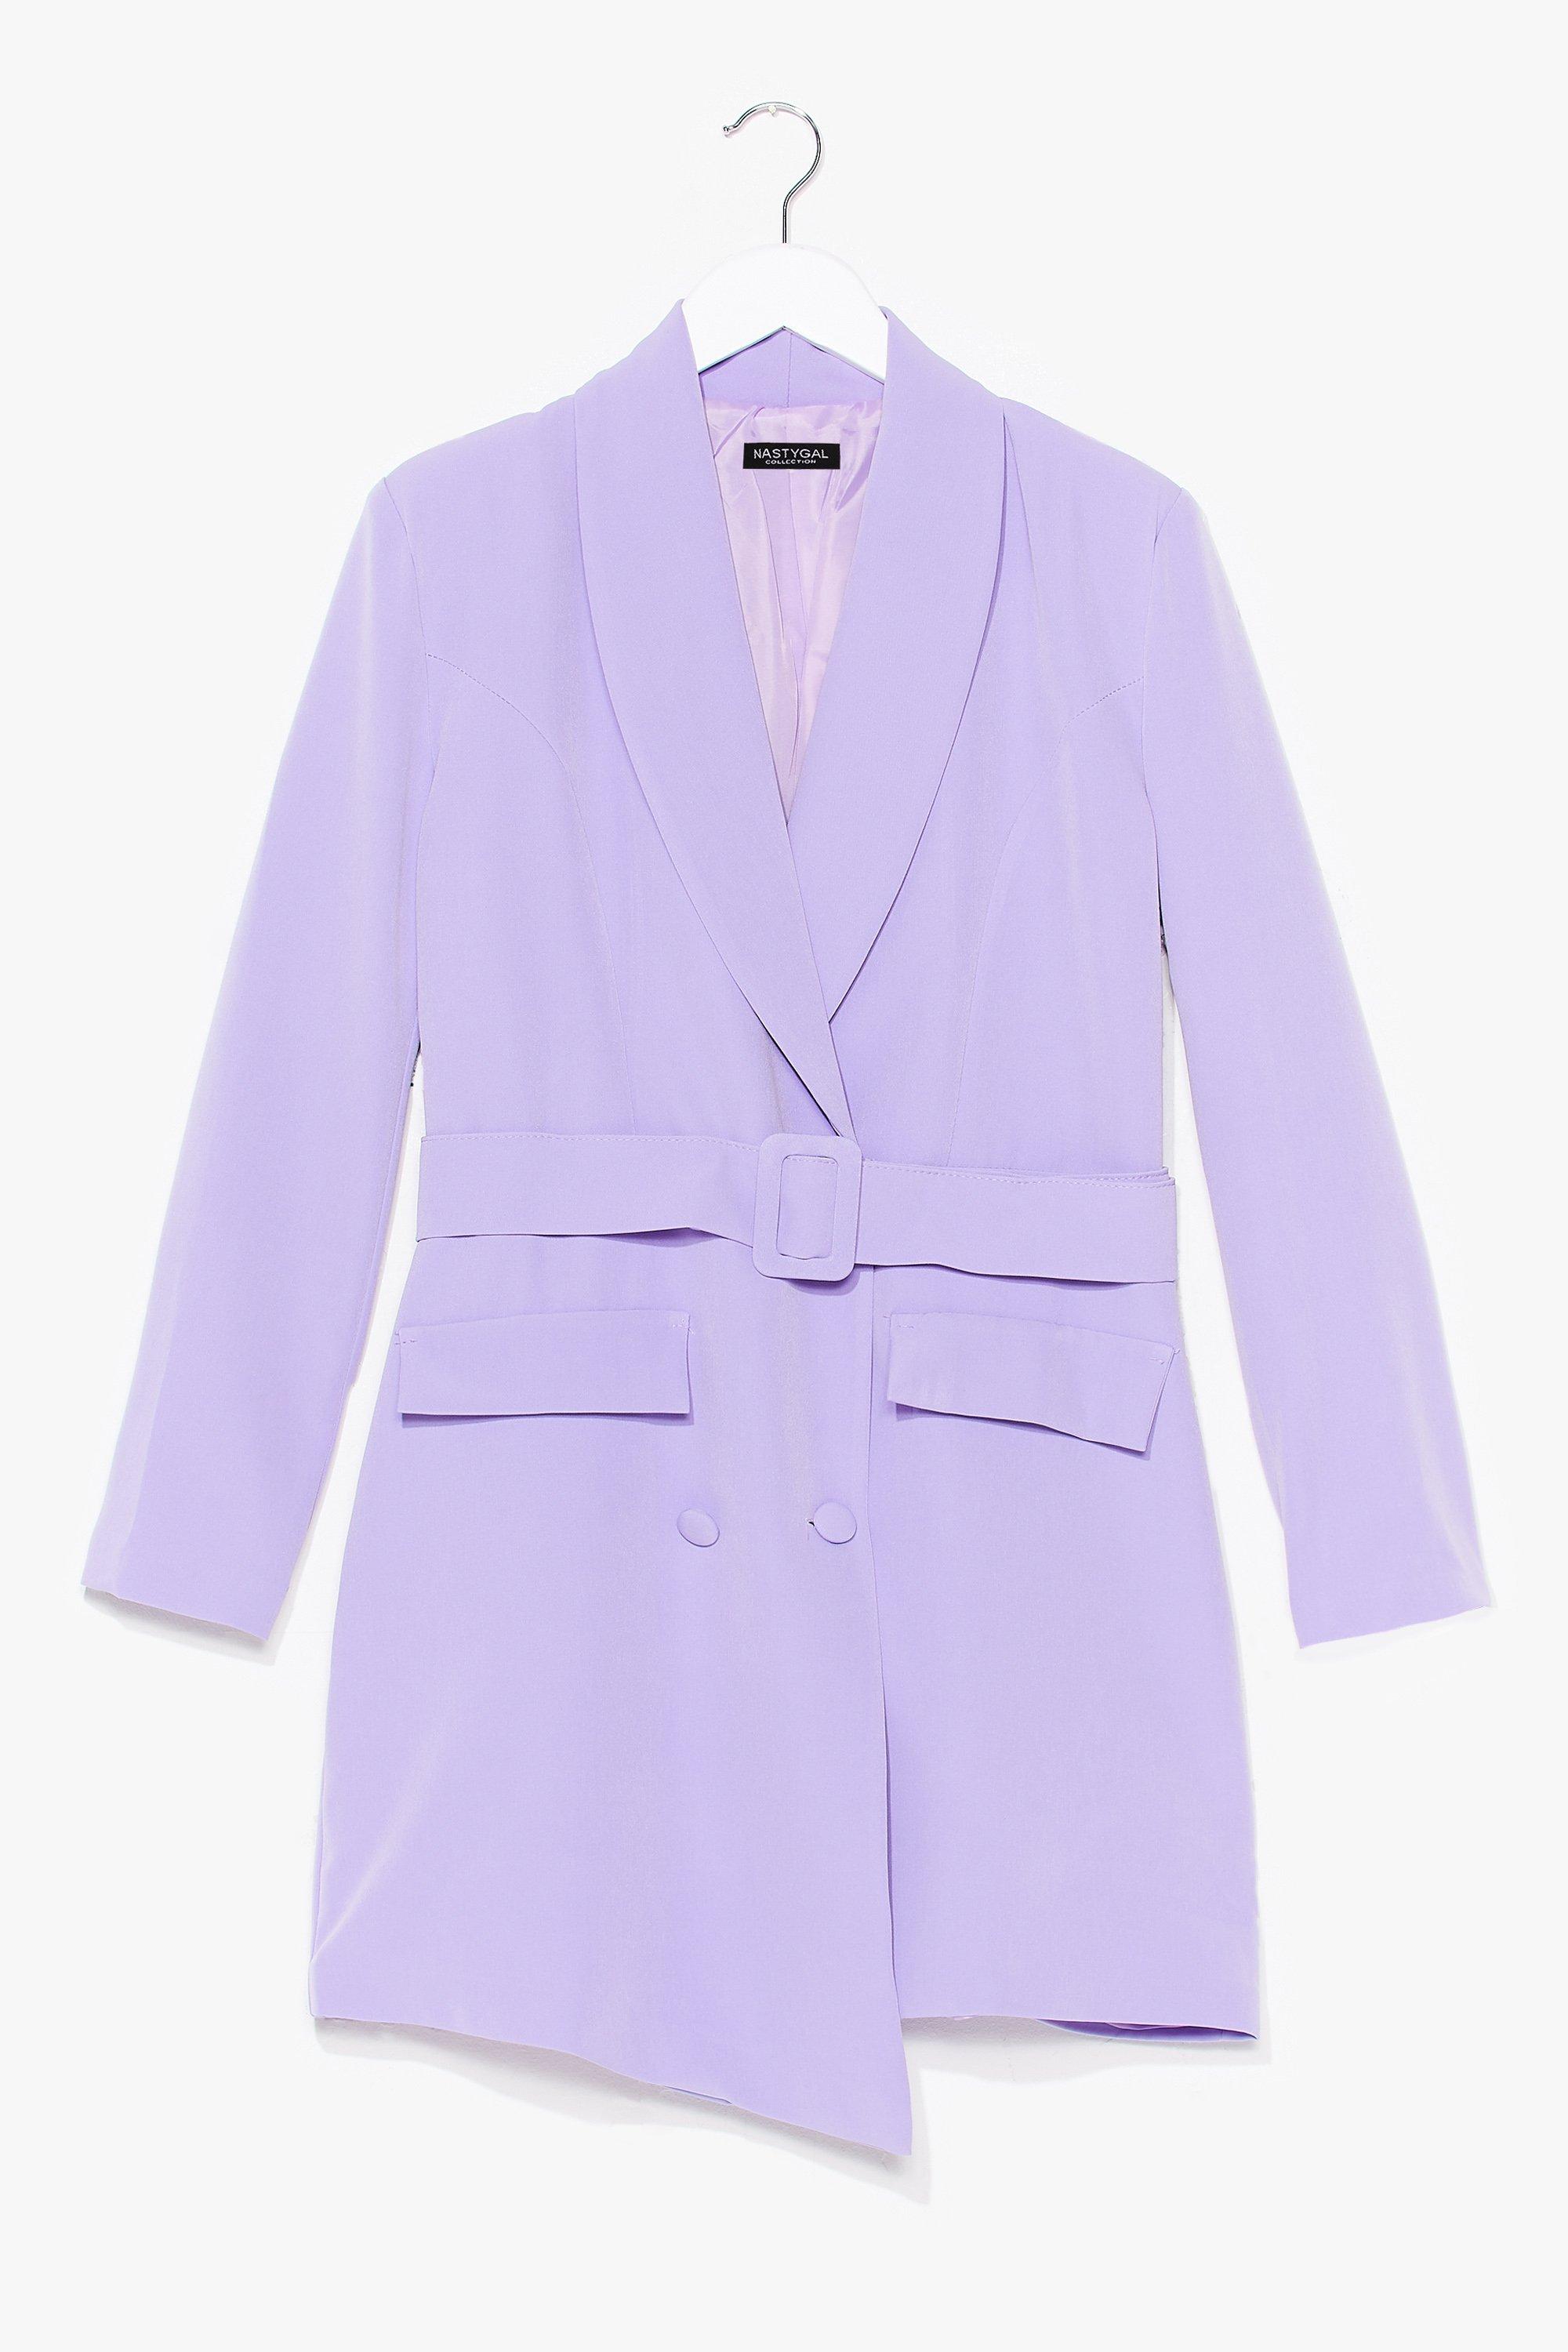 blazer dress purple